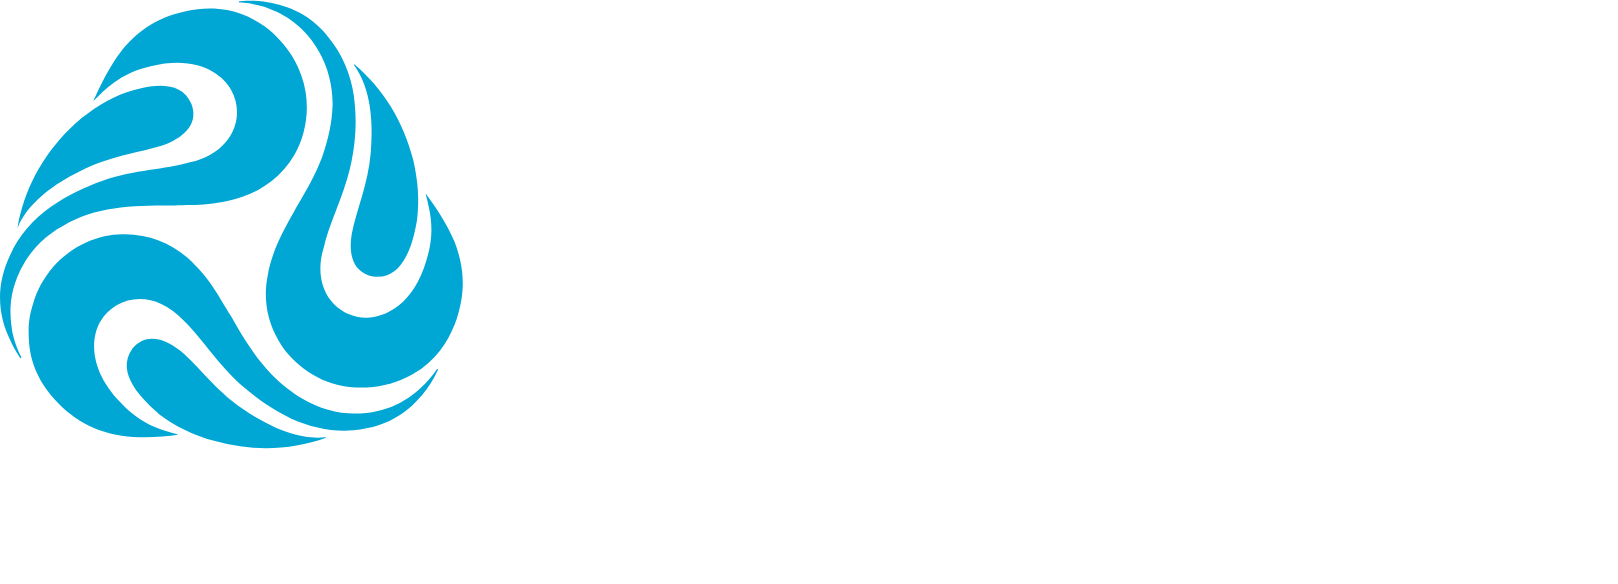 ESS Tech logo large for dark backgrounds (transparent PNG)